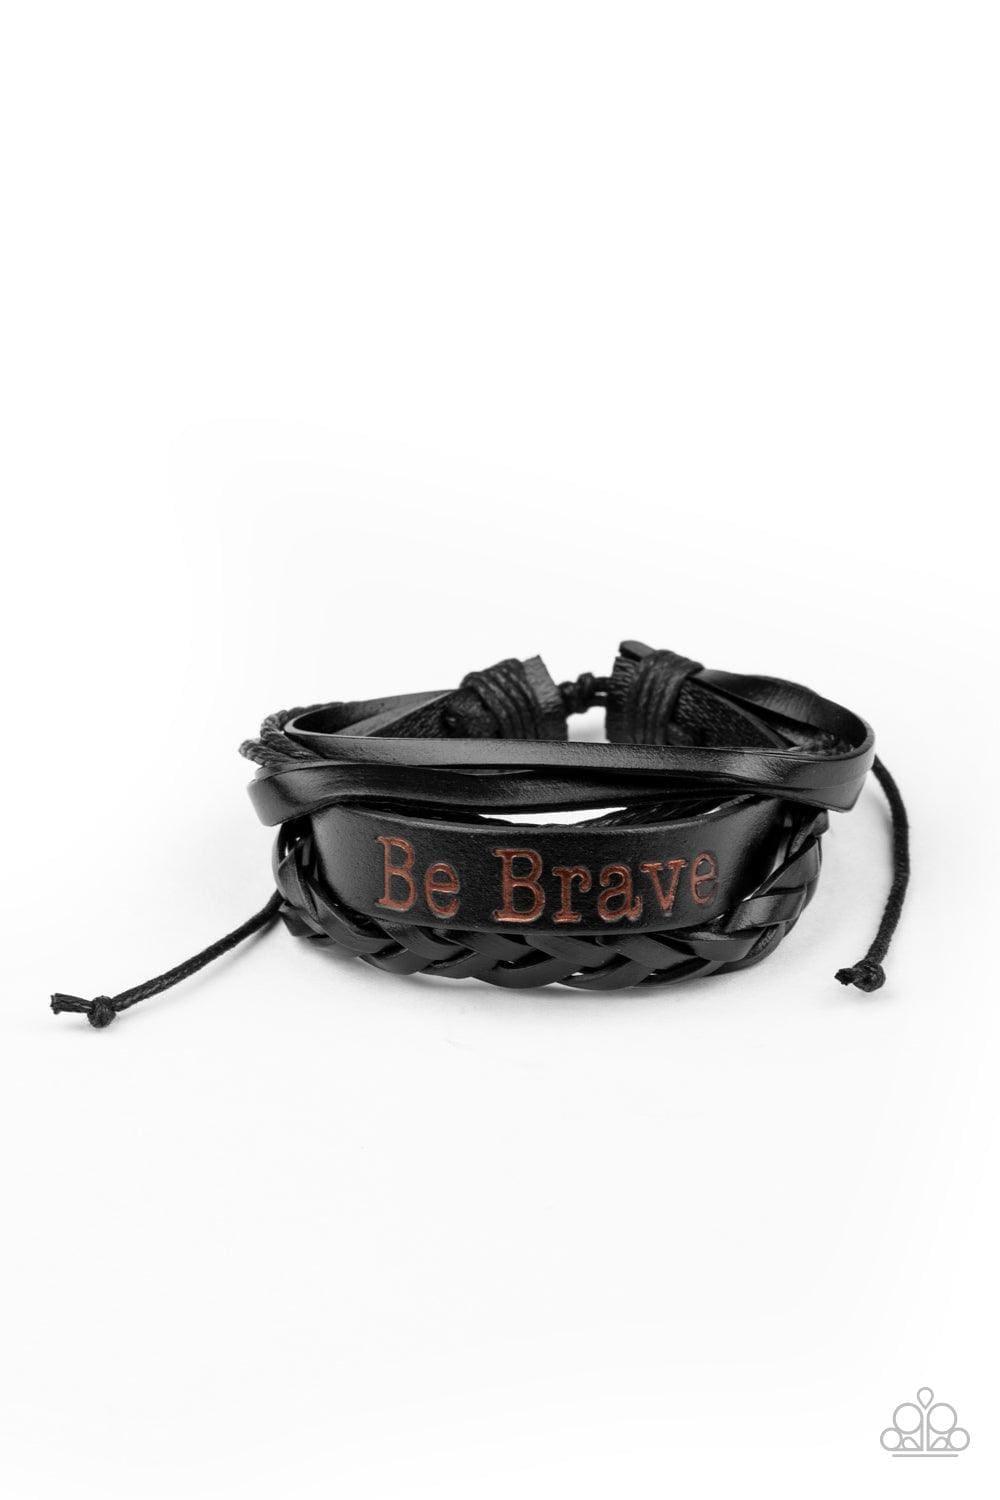 Paparazzi Accessories - Brave Soul - Black Urban Bracelet - Bling by JessieK